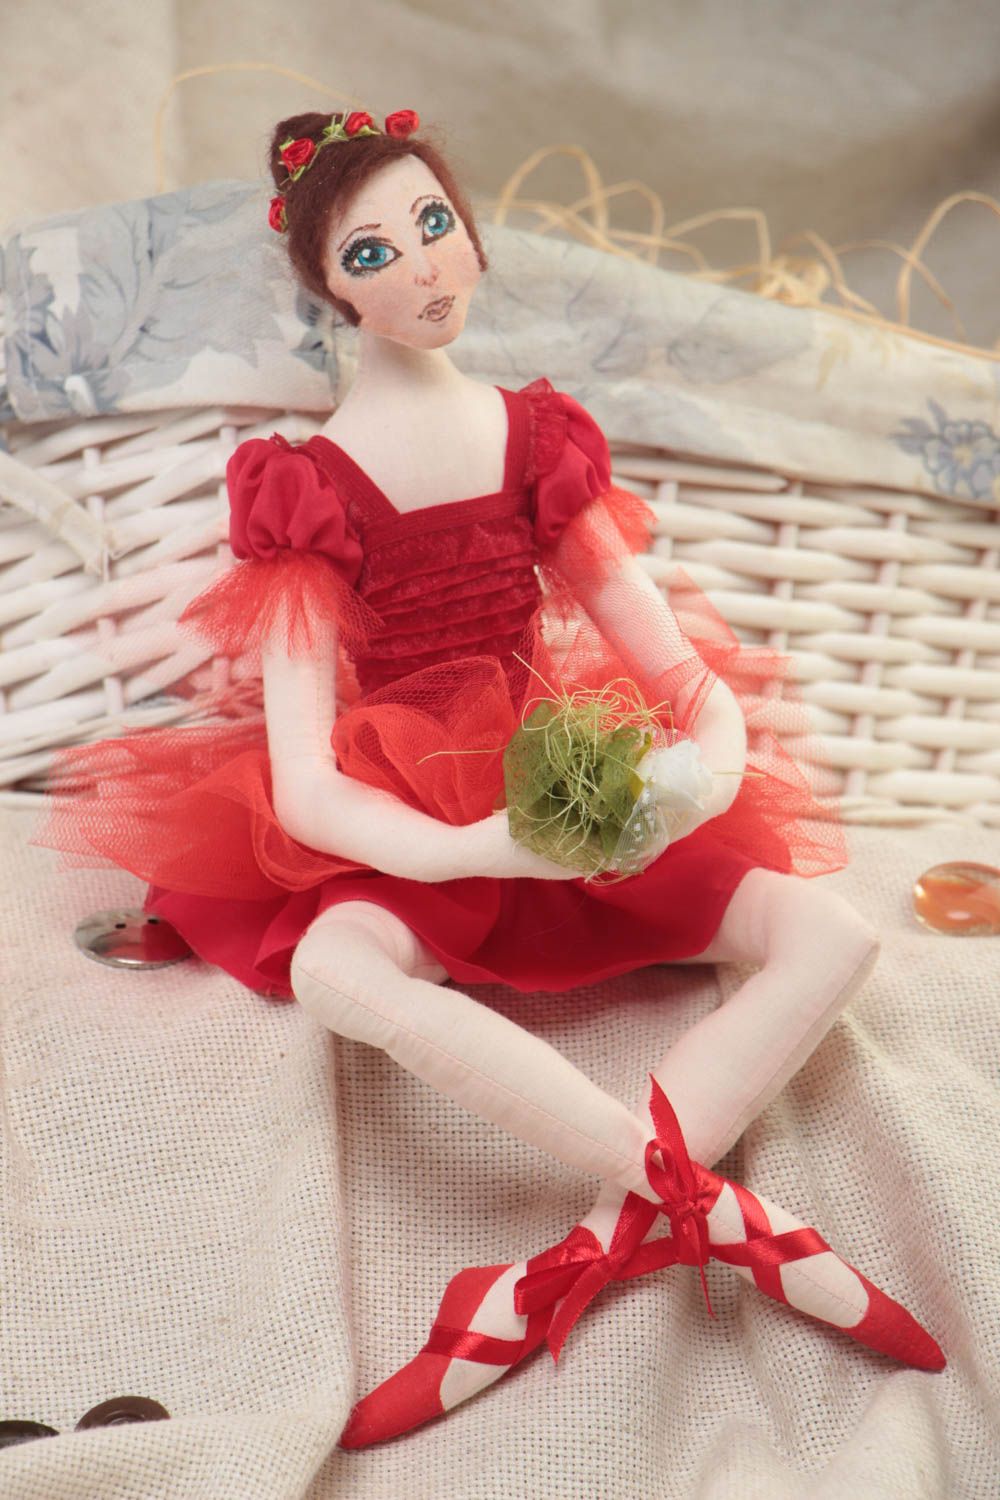 Muñeca bailarina juguete hecho a mano decoración de hogar juguete para niñas foto 1